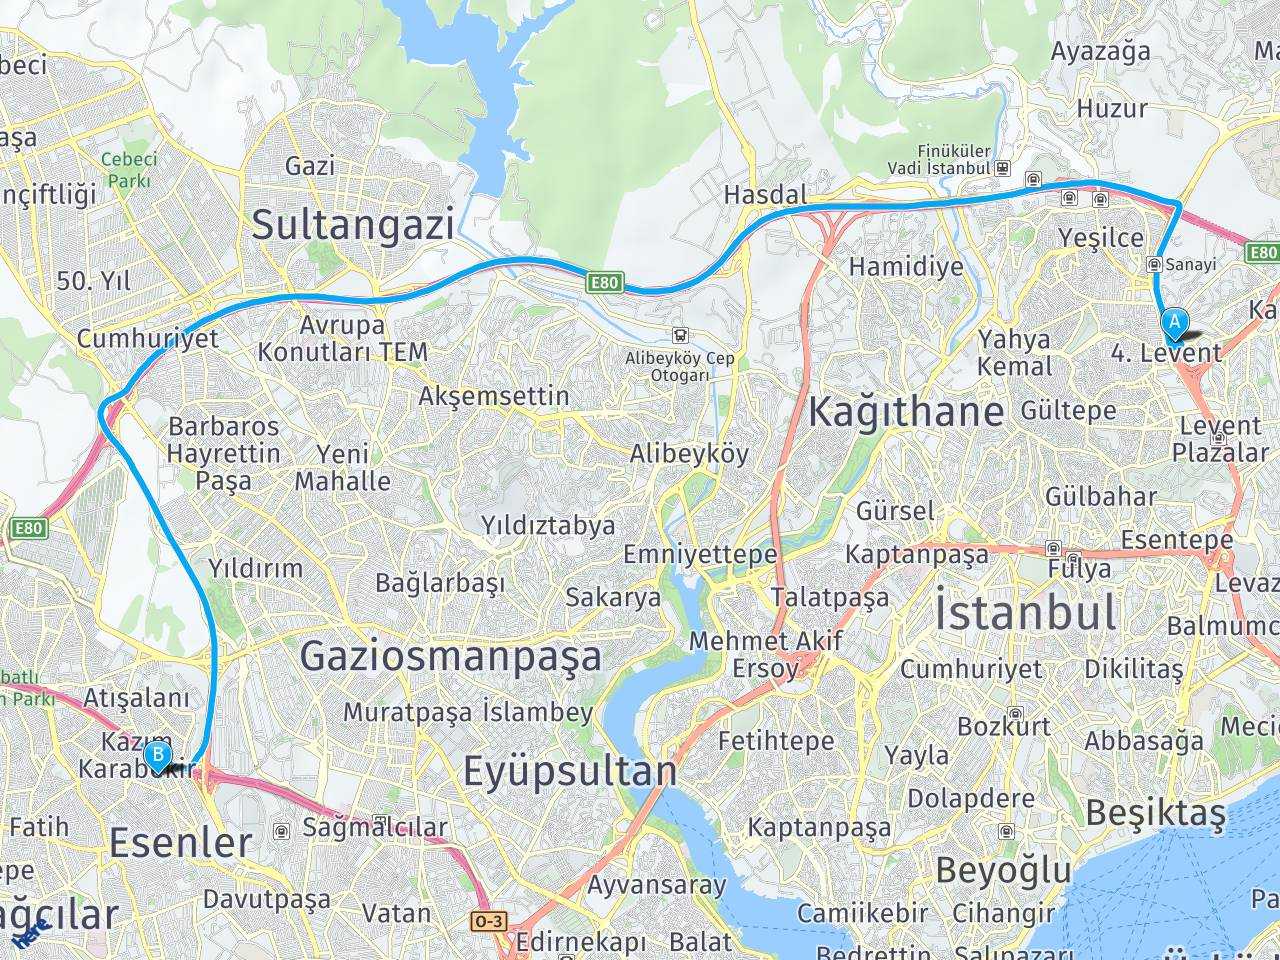 Konaklar Mh Akçam Cd No3 Daire19 4.levent İstanbul, Turkey Atışalanı haritası